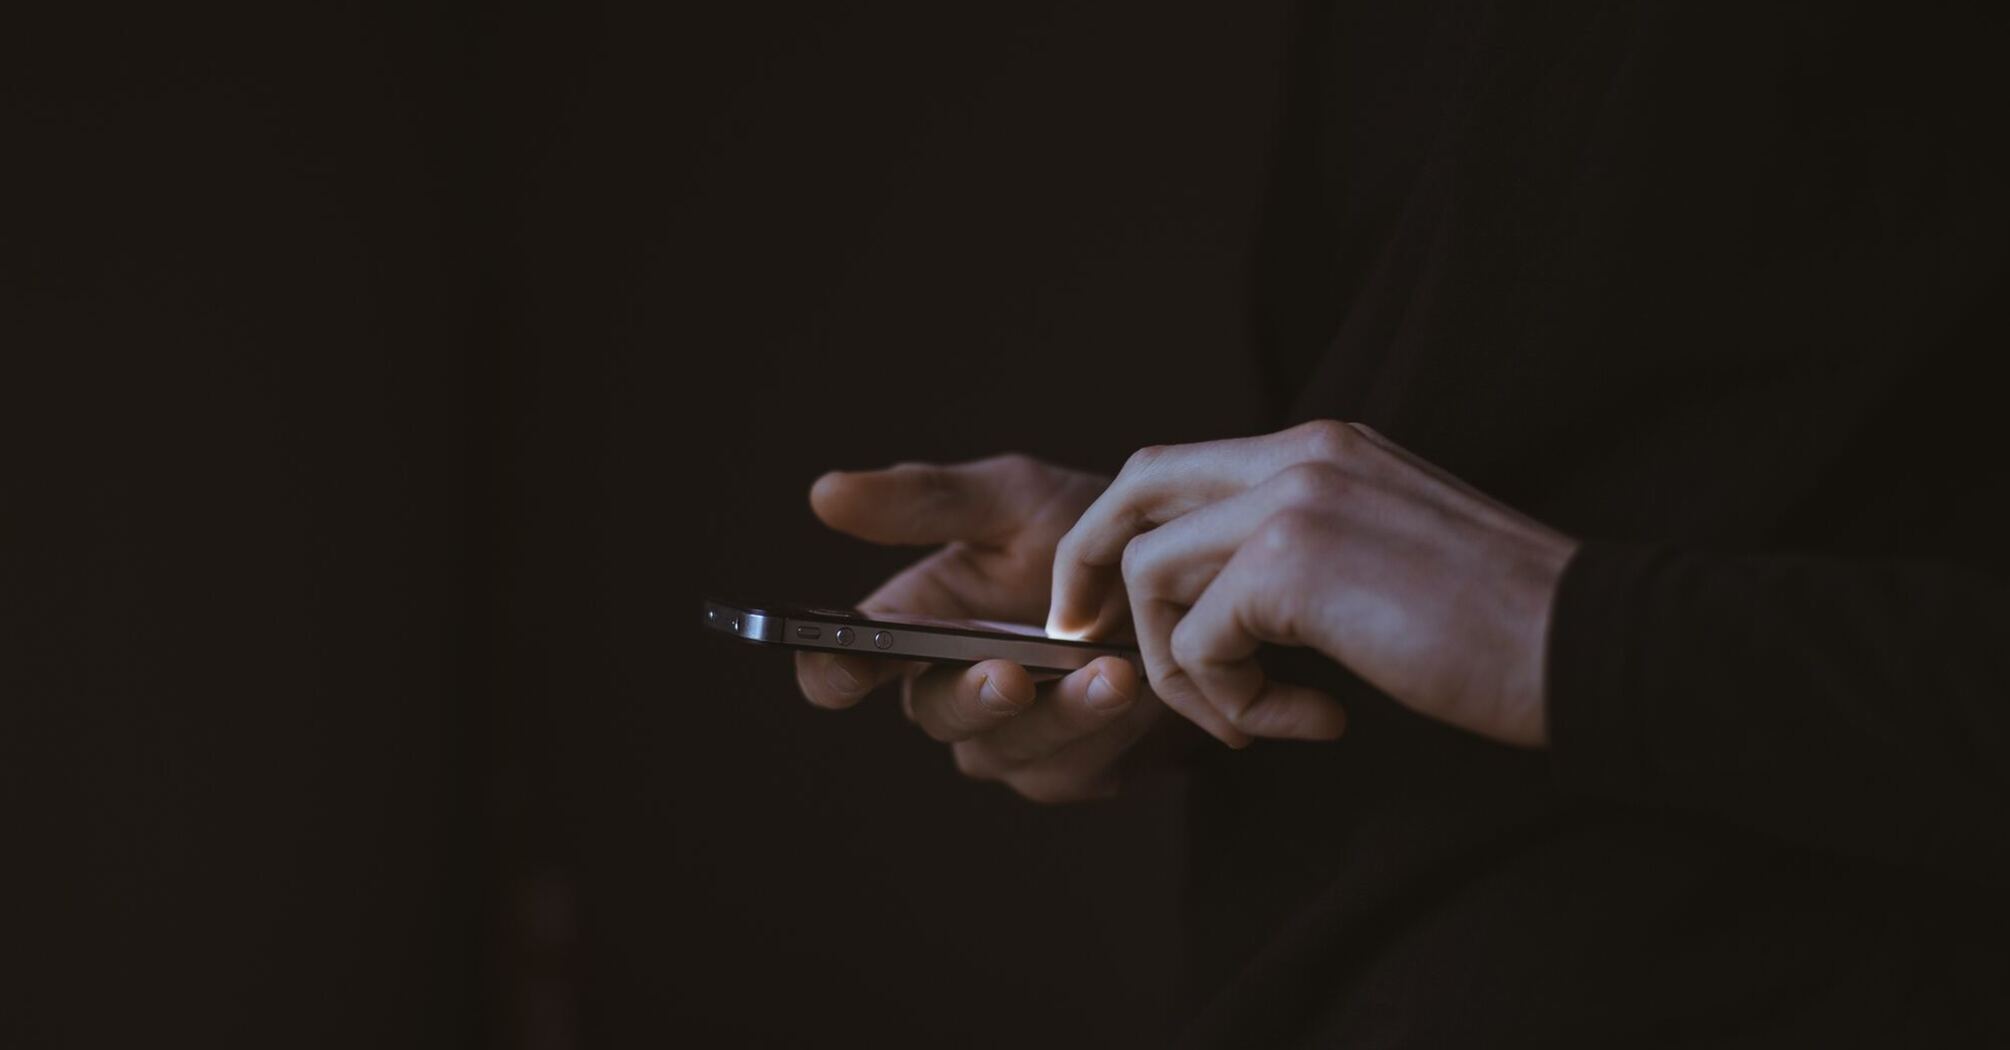 Phone in hands on a dark background